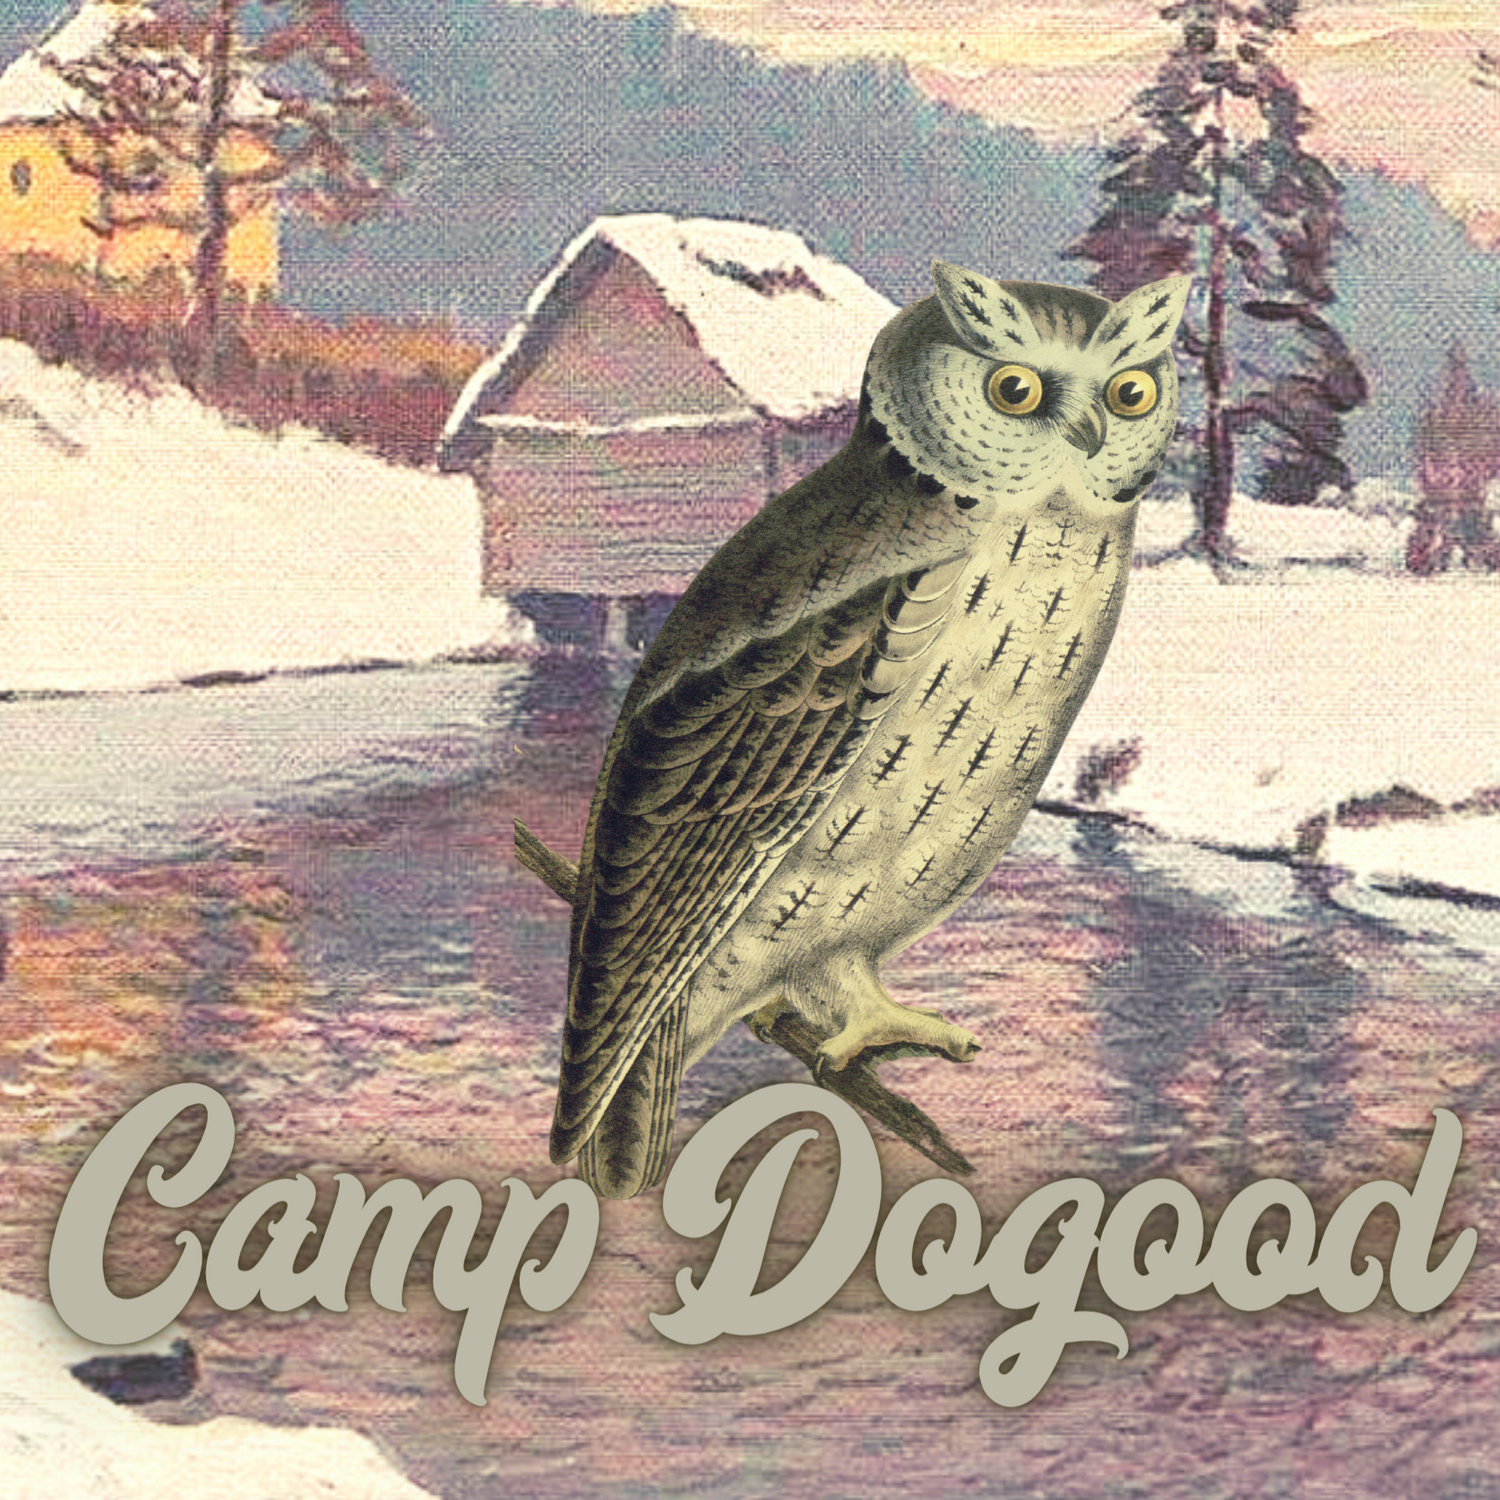 Camp Dogood